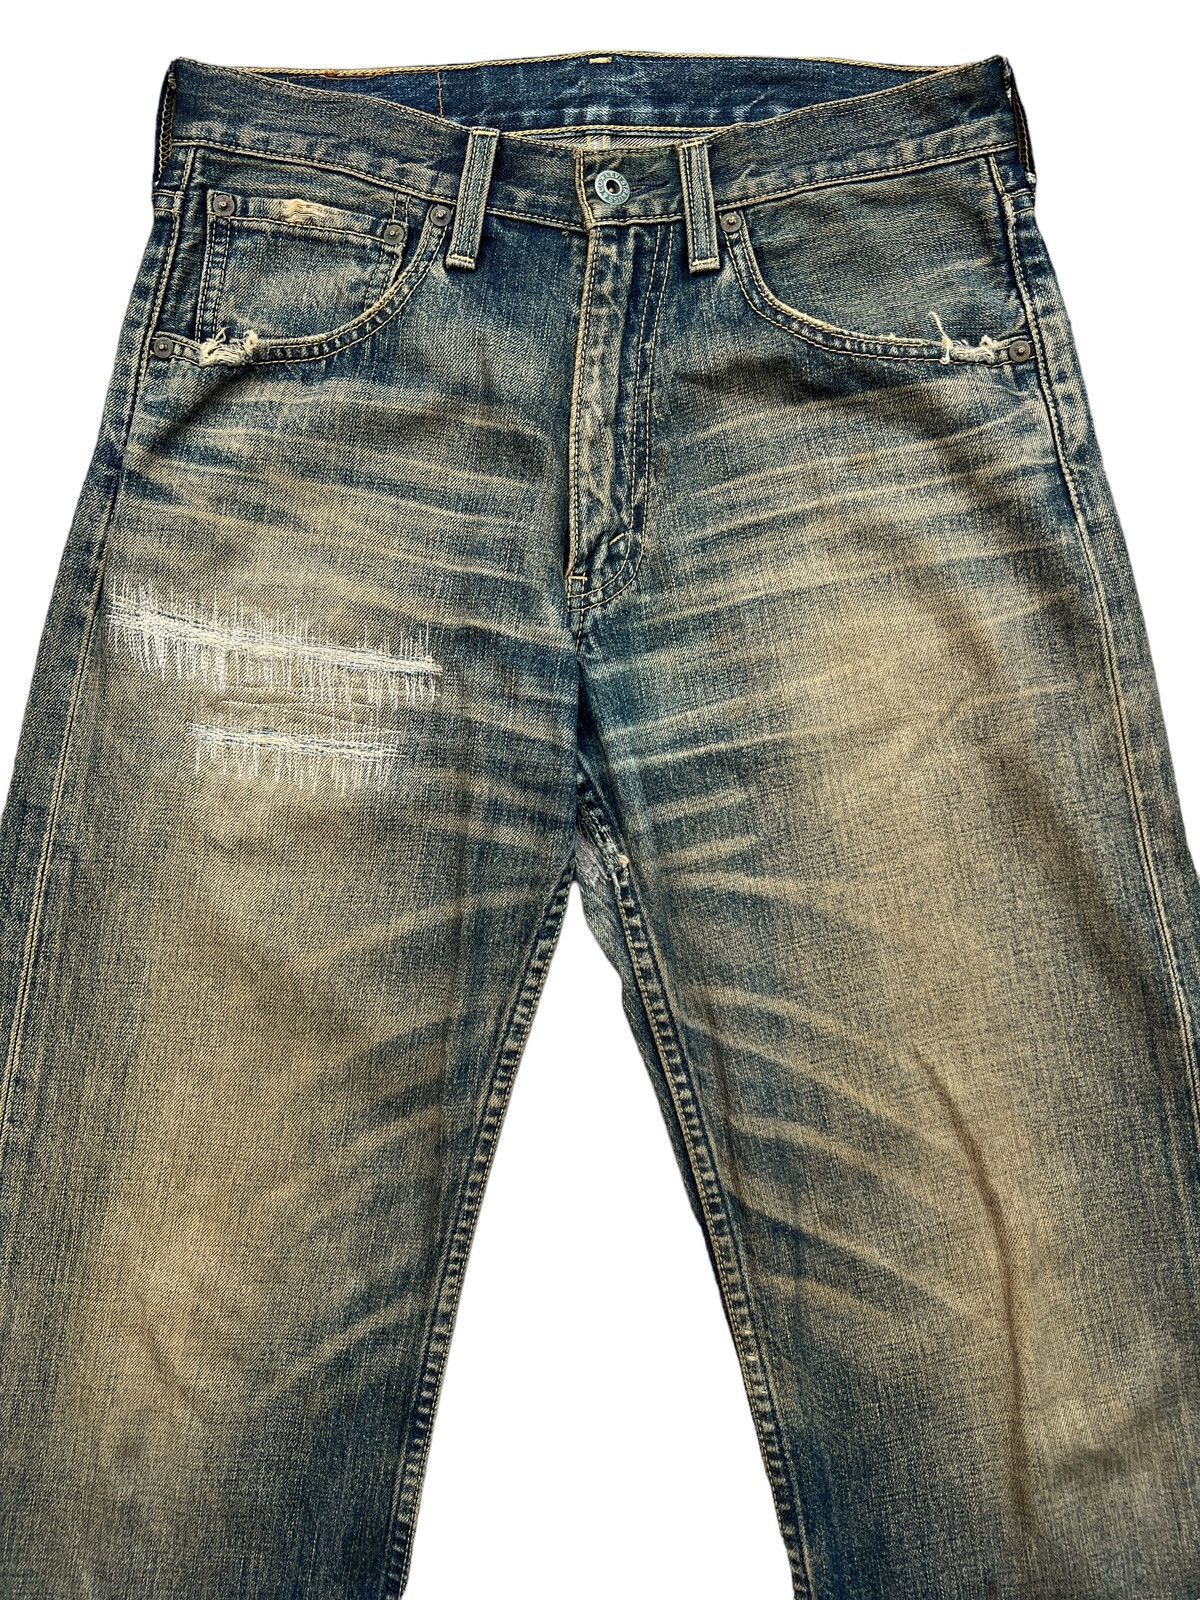 Vintage Levi’s 503 Distressed Rusty Denim Jeans 30x32 - 4